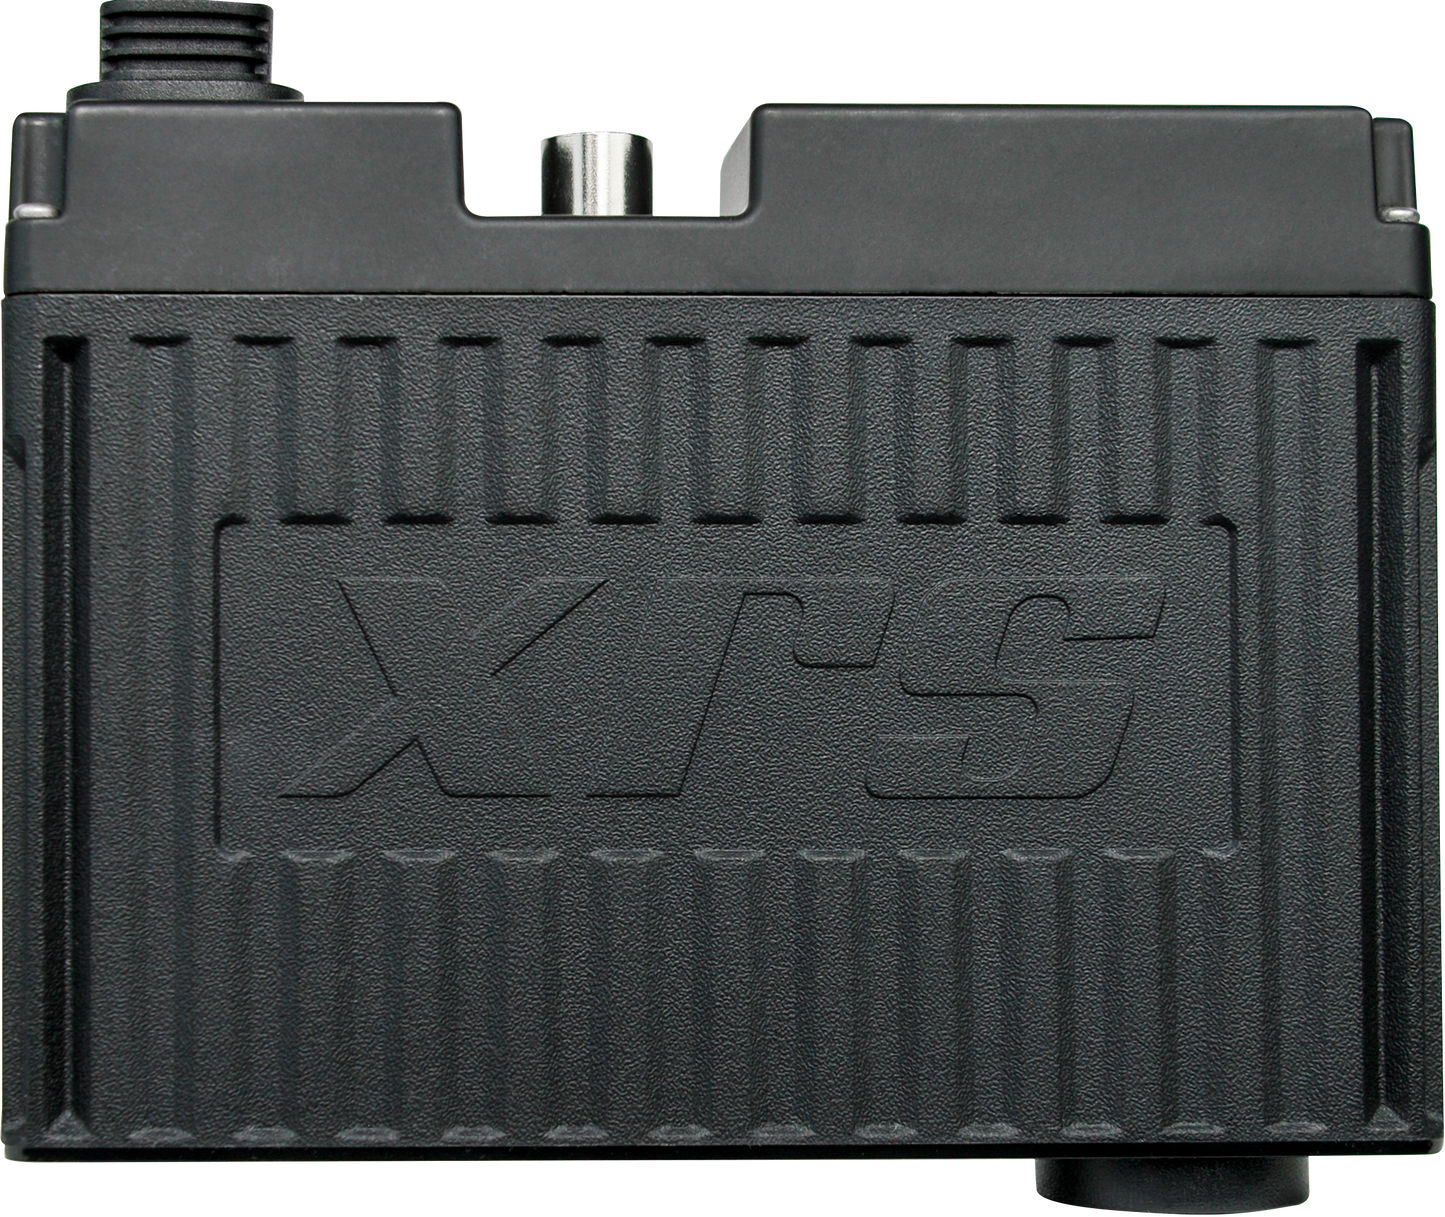 XRS-390c UHF RADIO WITH BLUETOOTH & GPS